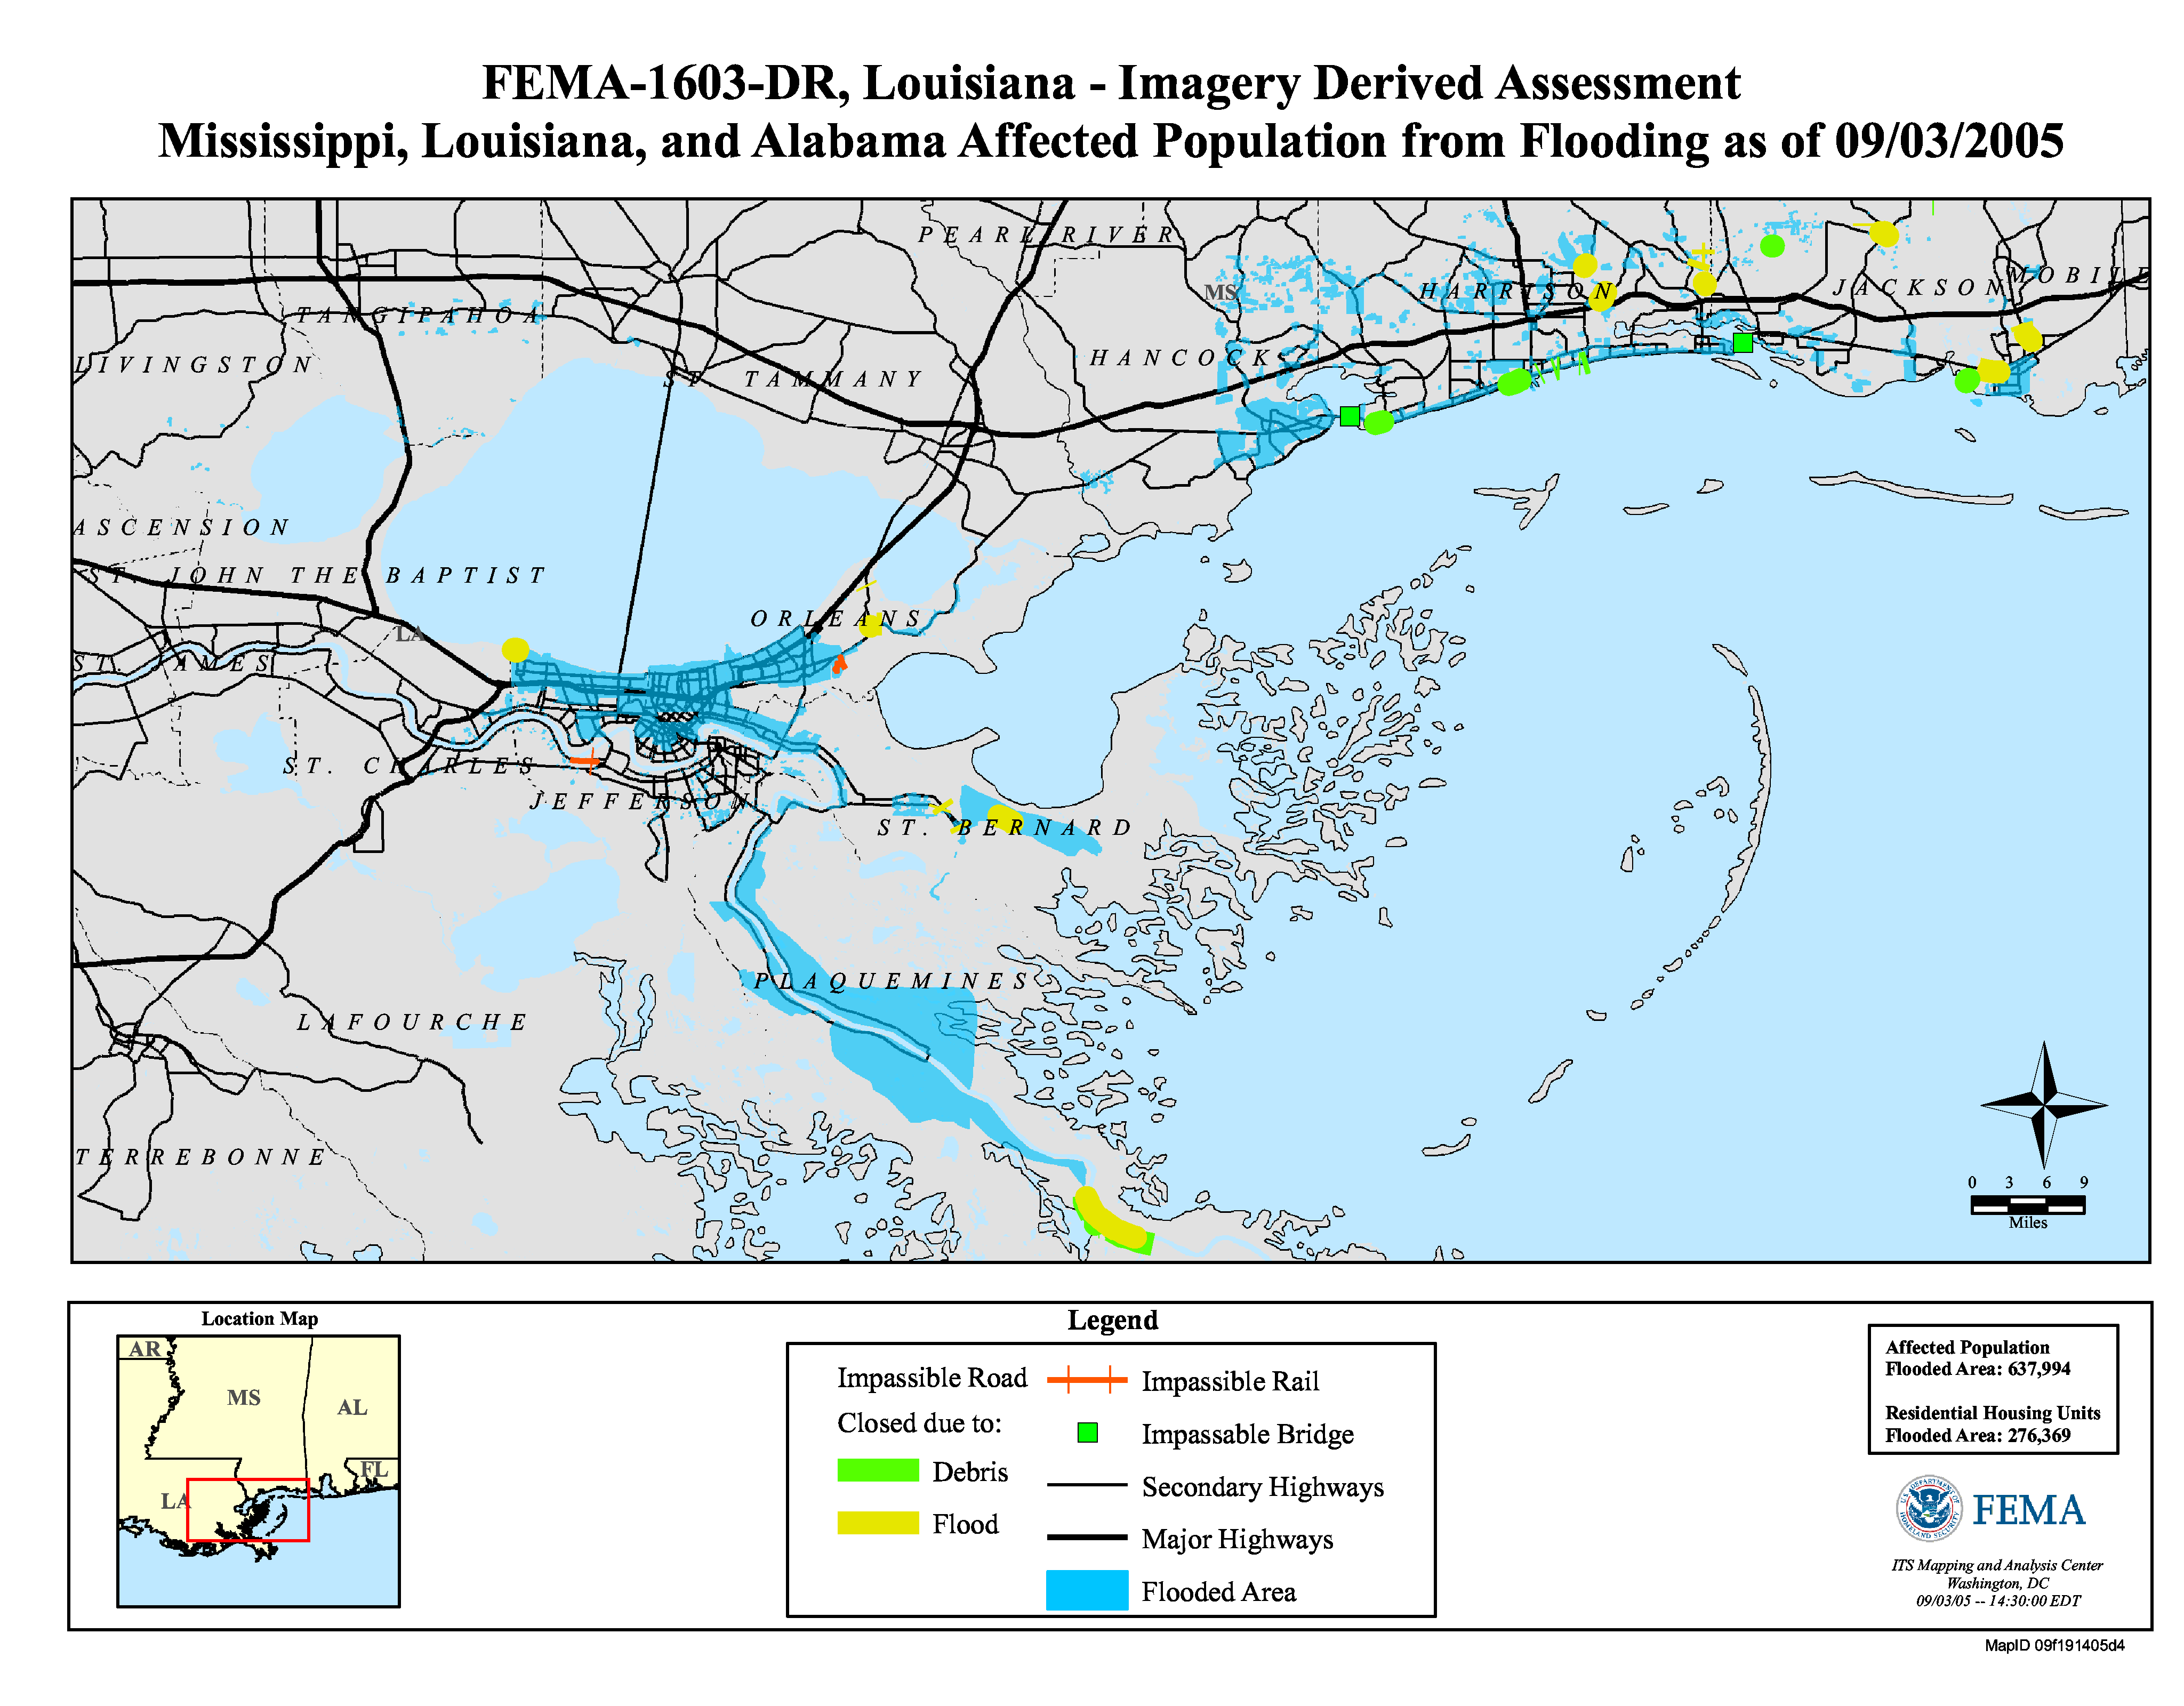 FEMA map of affected area.